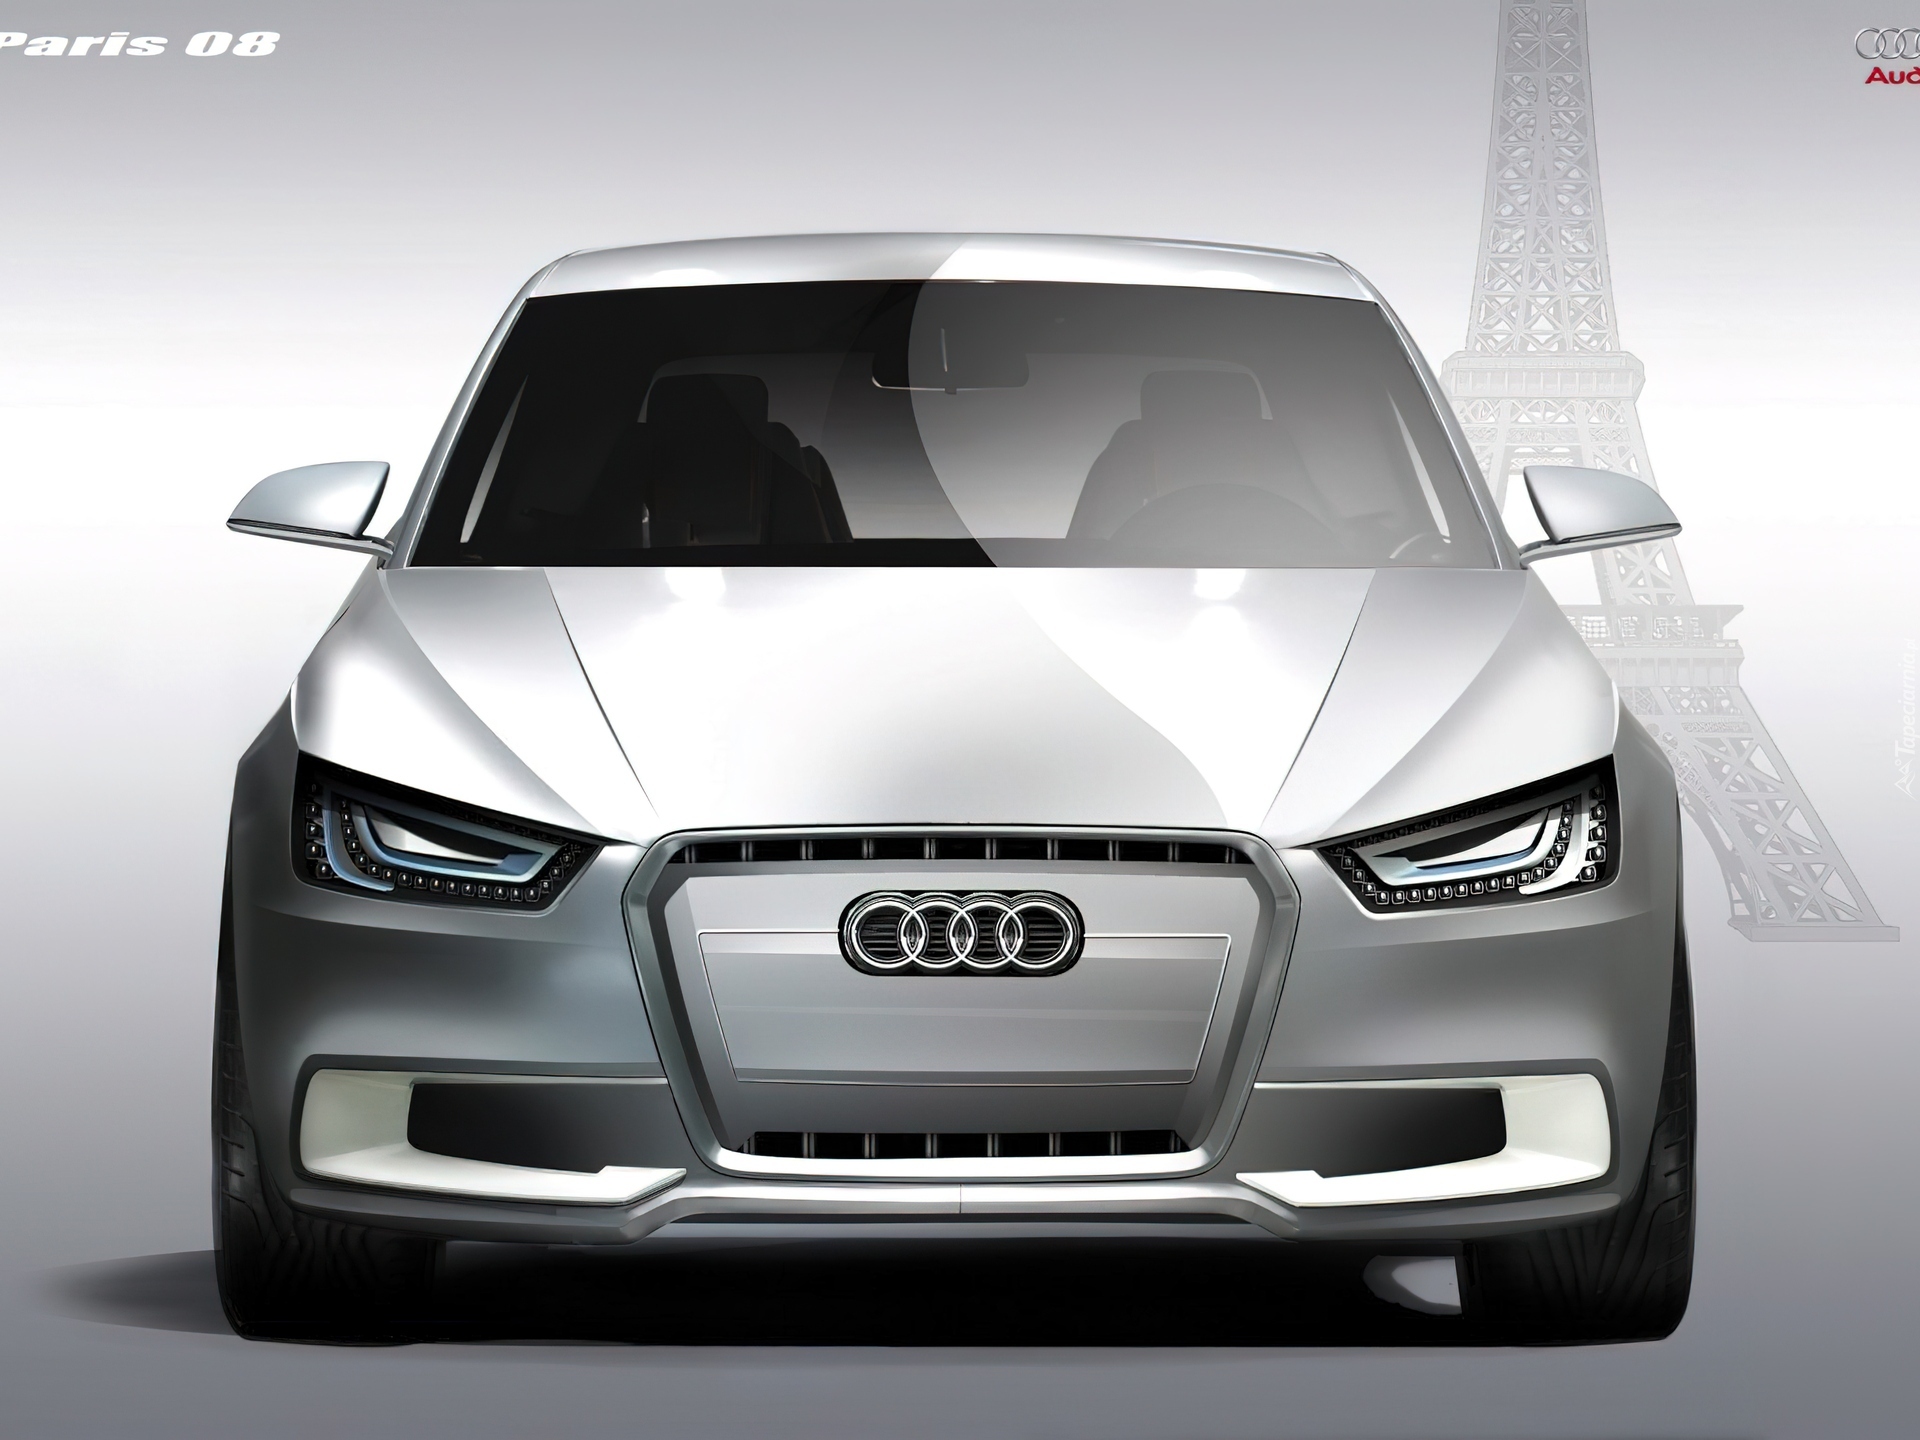 Audi A1, Salon, Paryż